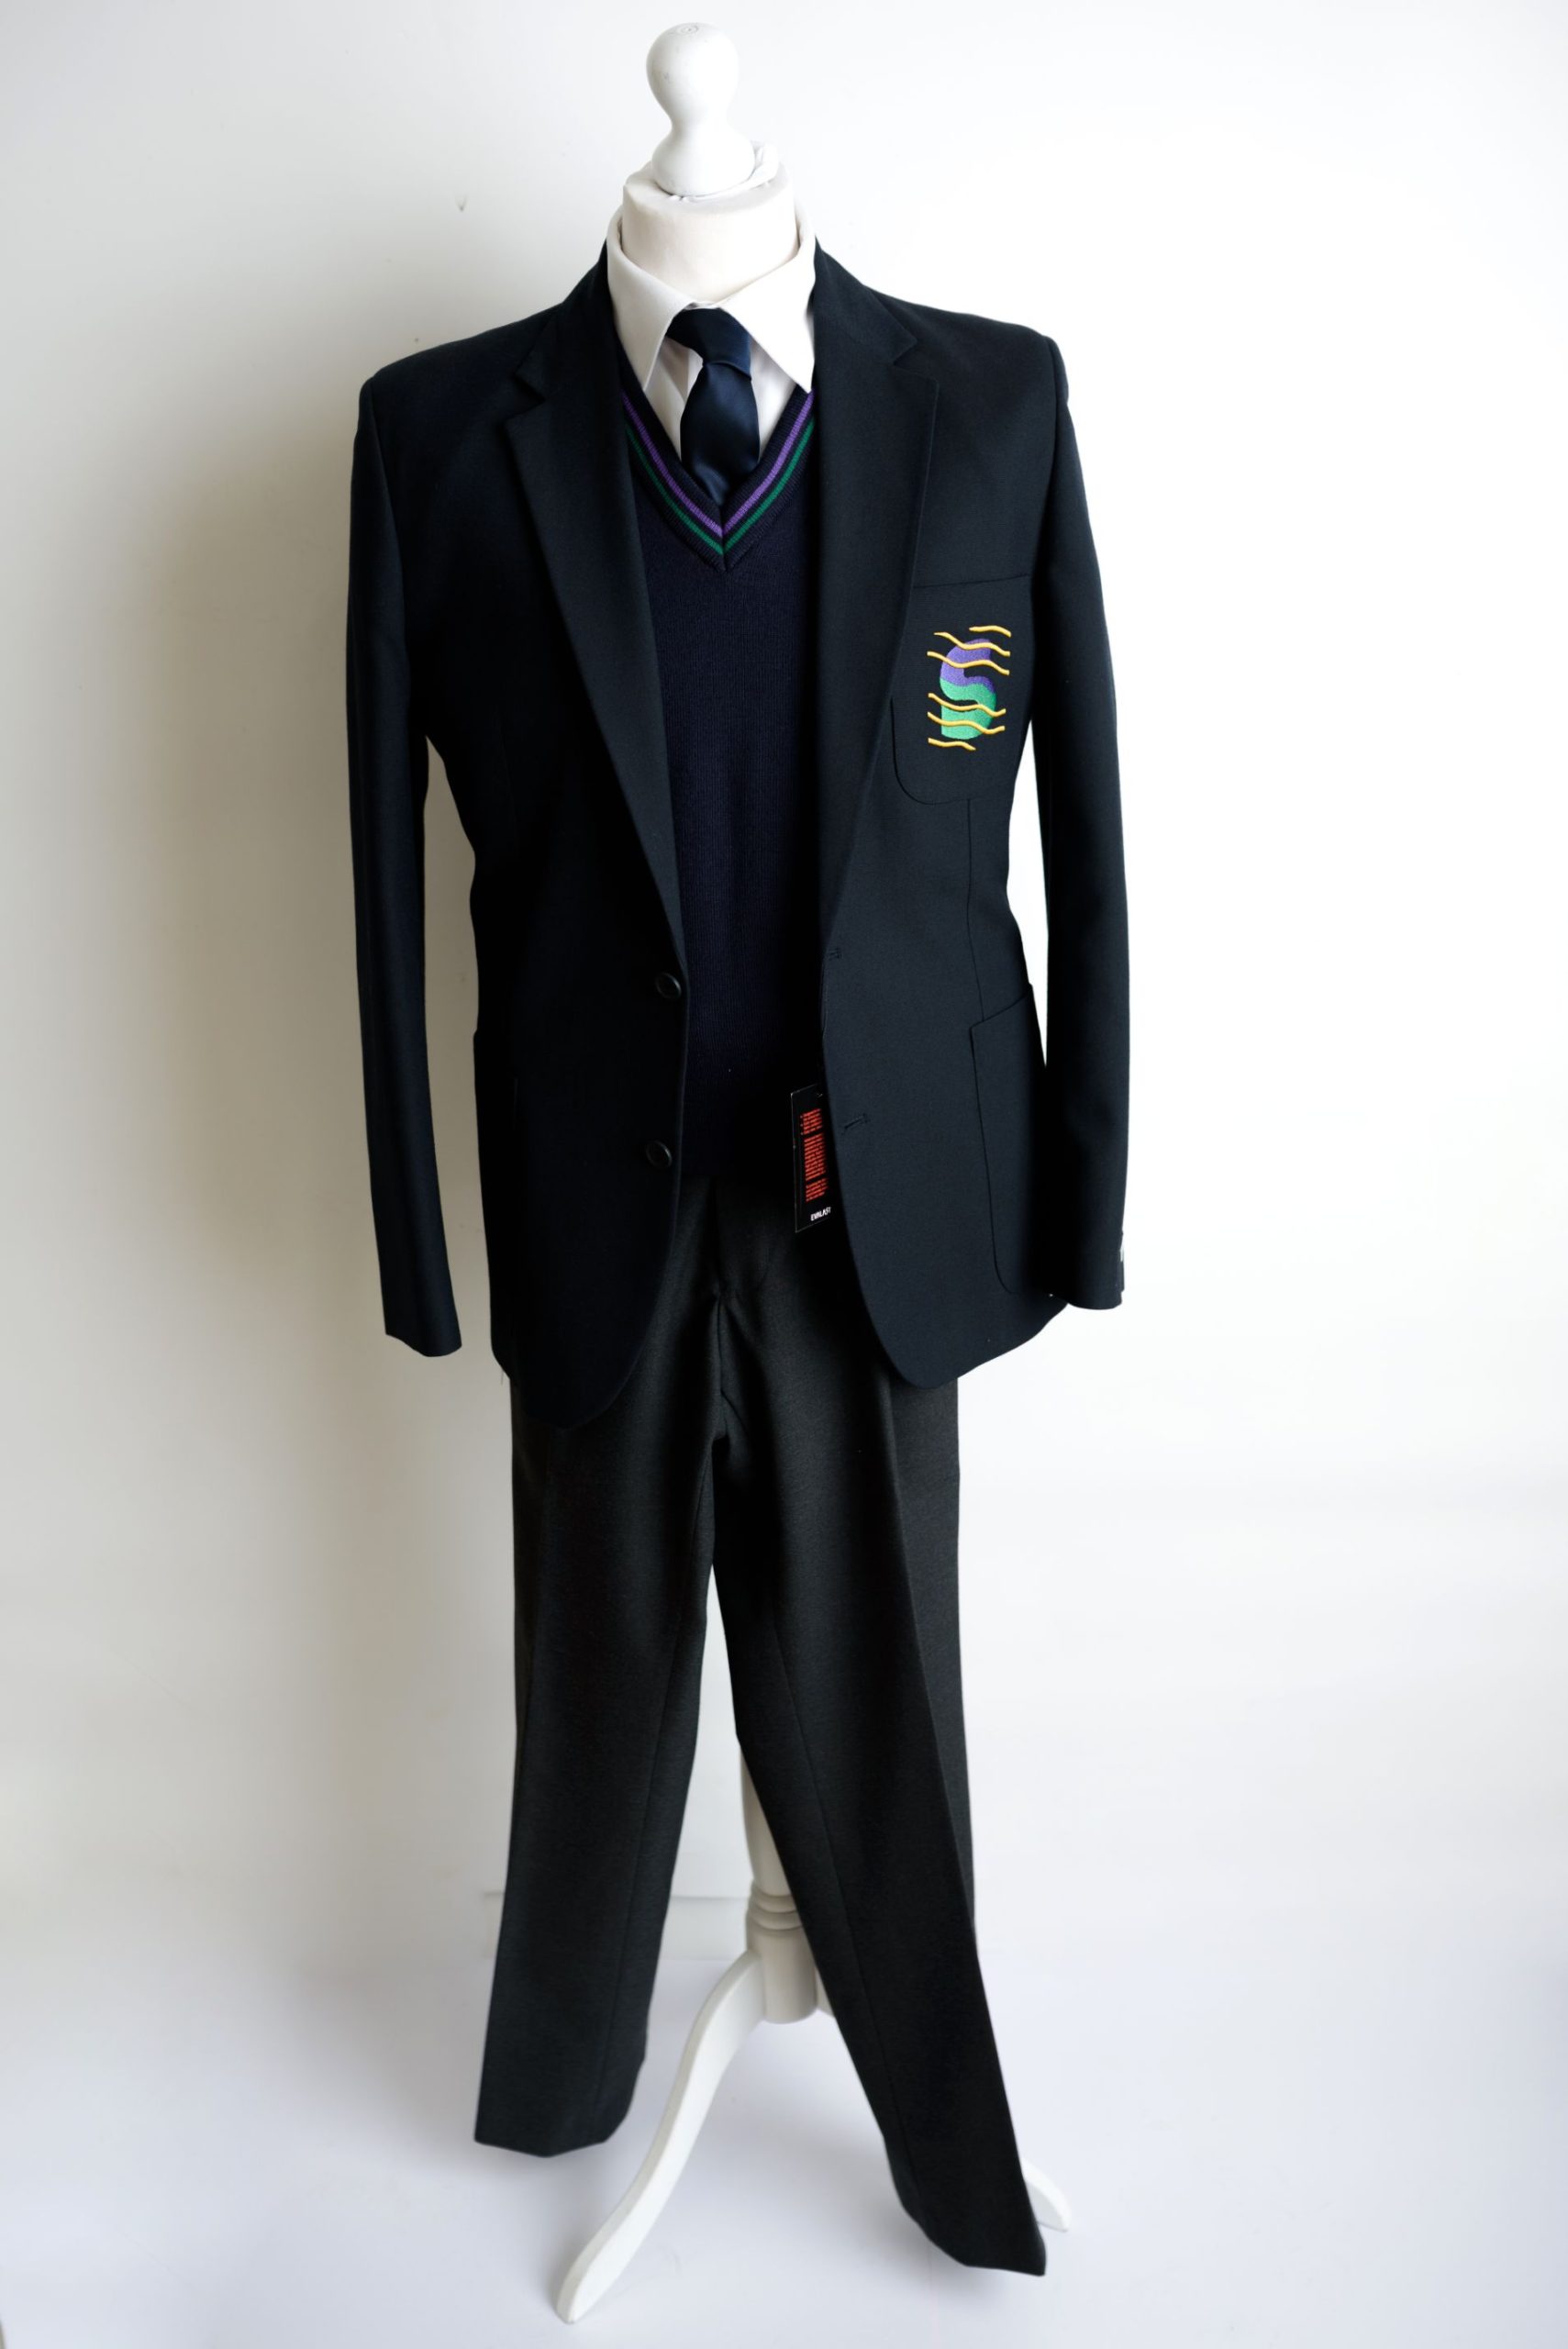 Shimna Integrated College boys uniform